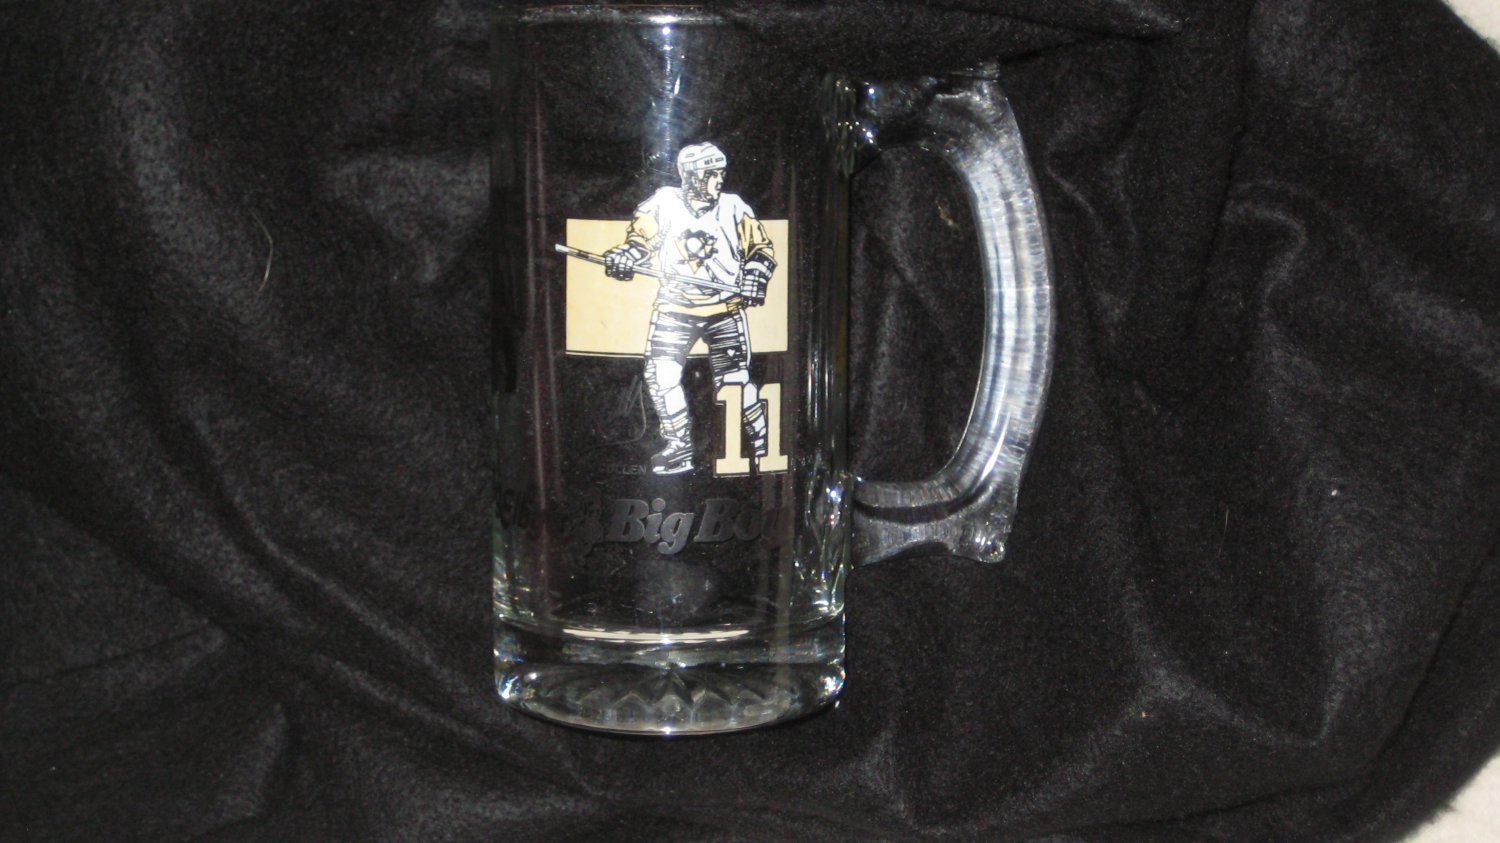 Pittsburgh Penguins Elby's Big Boy ROB BROWN JOHN CULLEN NHL Hockey Glass Mug